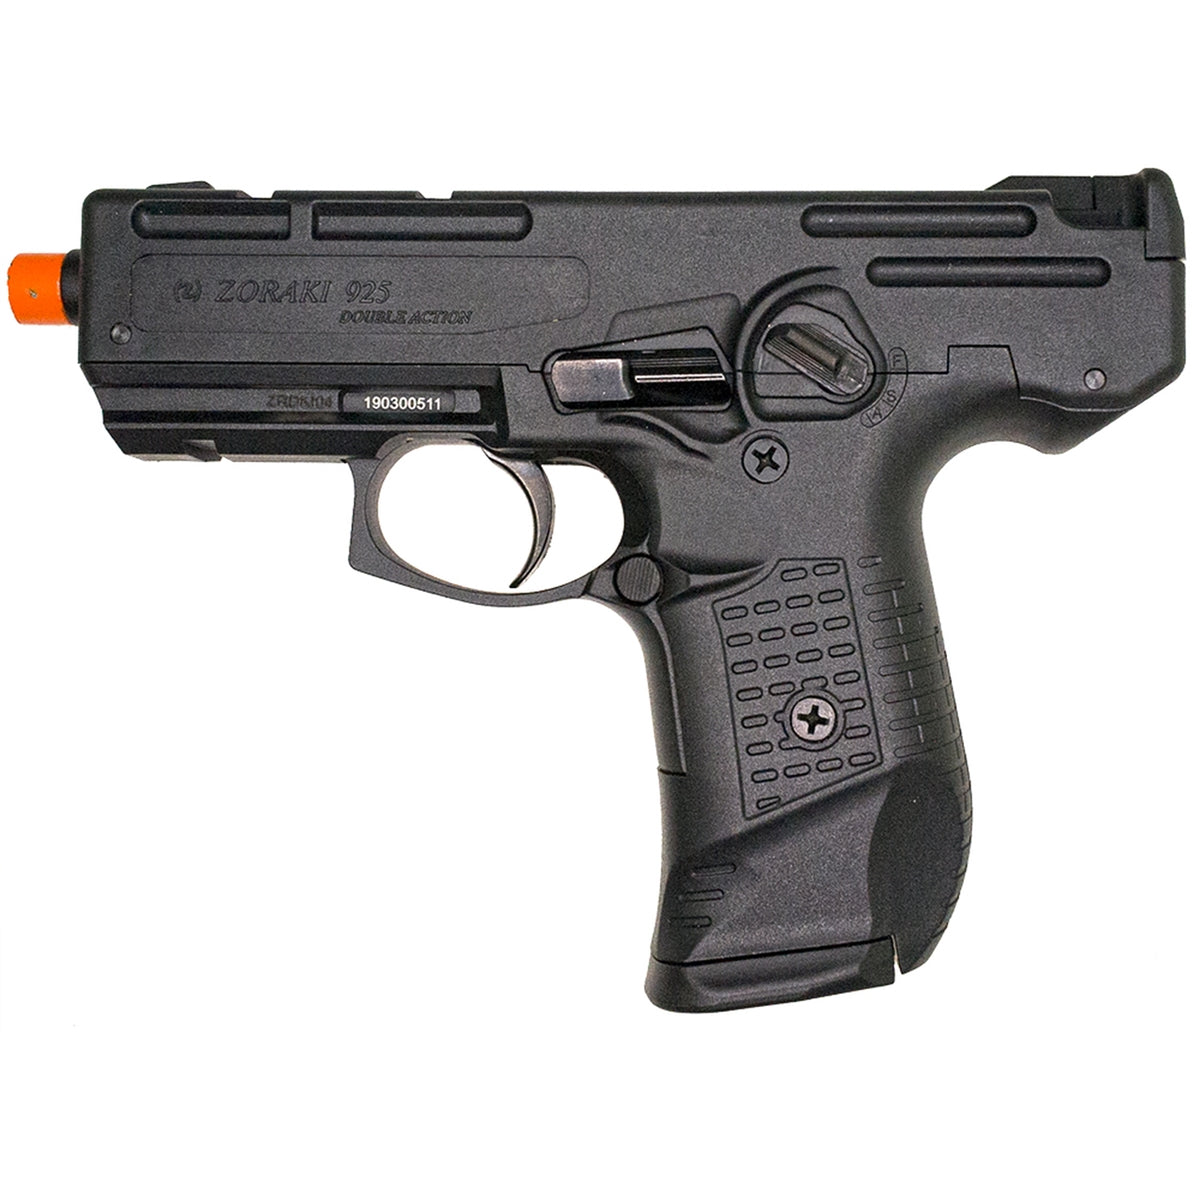 Blank Firing Pistol - ZORAKI 925 Full-Auto Front-Firing  - 9mm PAK - Black Finish